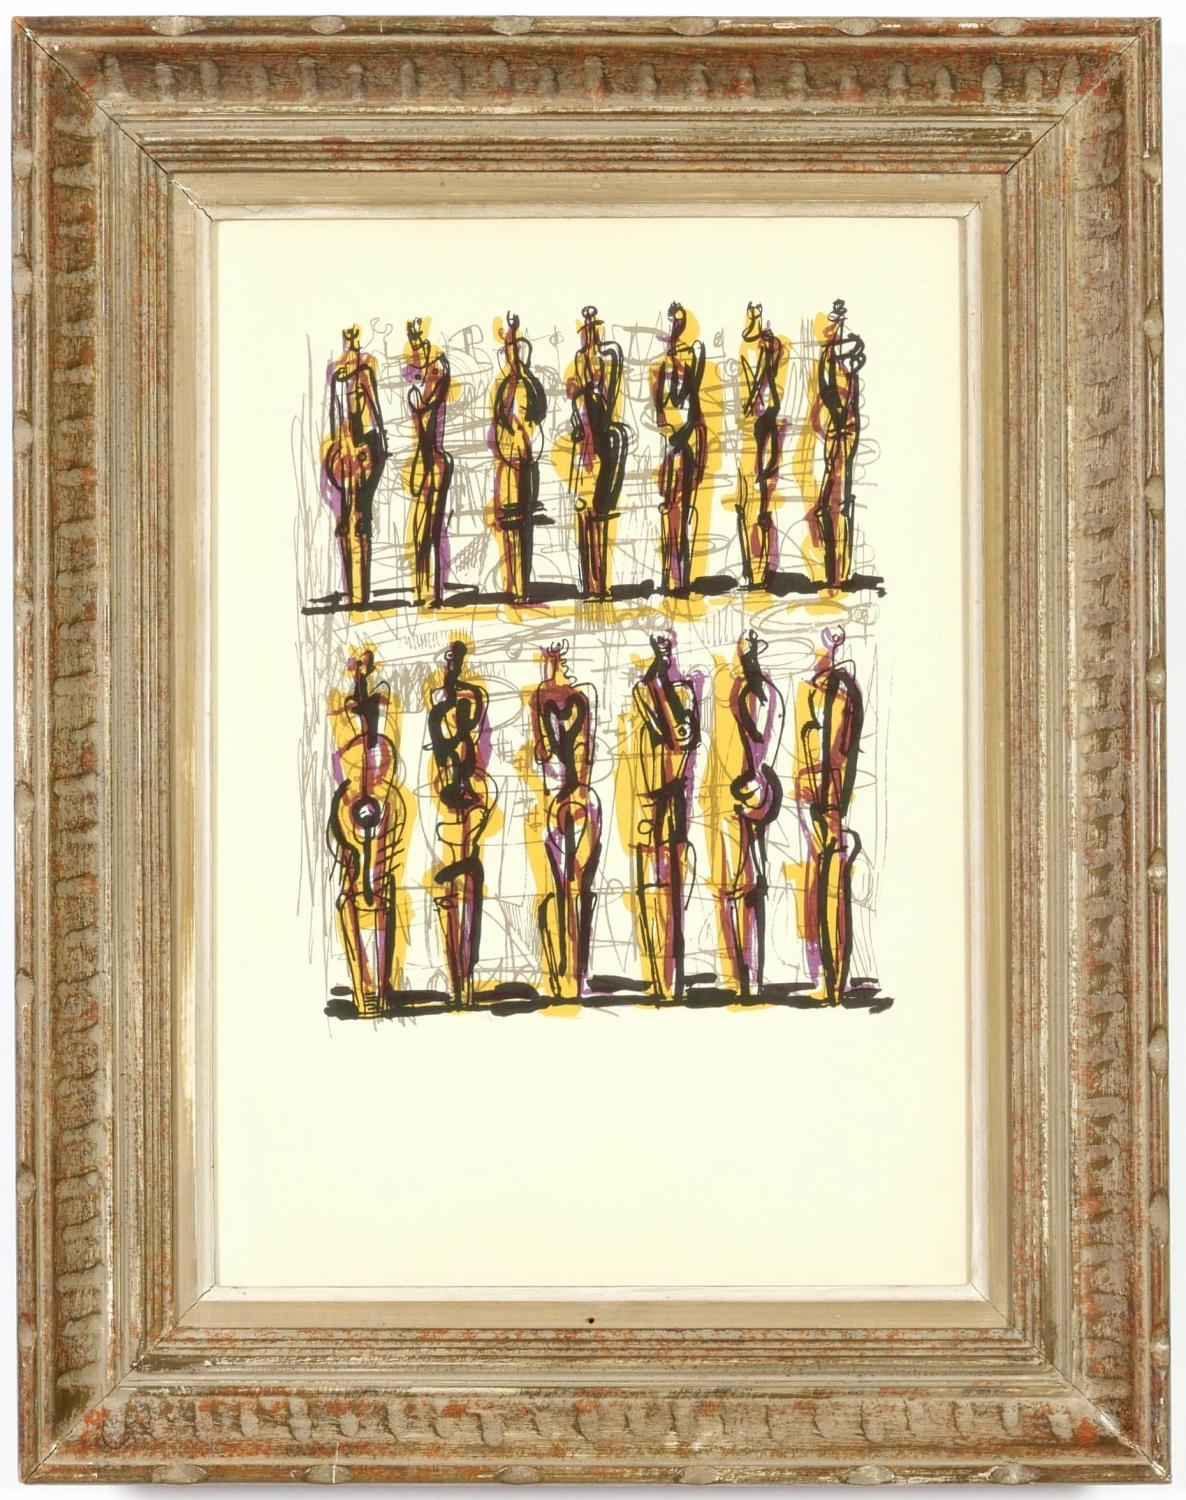 HENRY MOORE, Thirteen Standing Figures, lithograph, bears a Henry Moore watermark, 1958, vintage